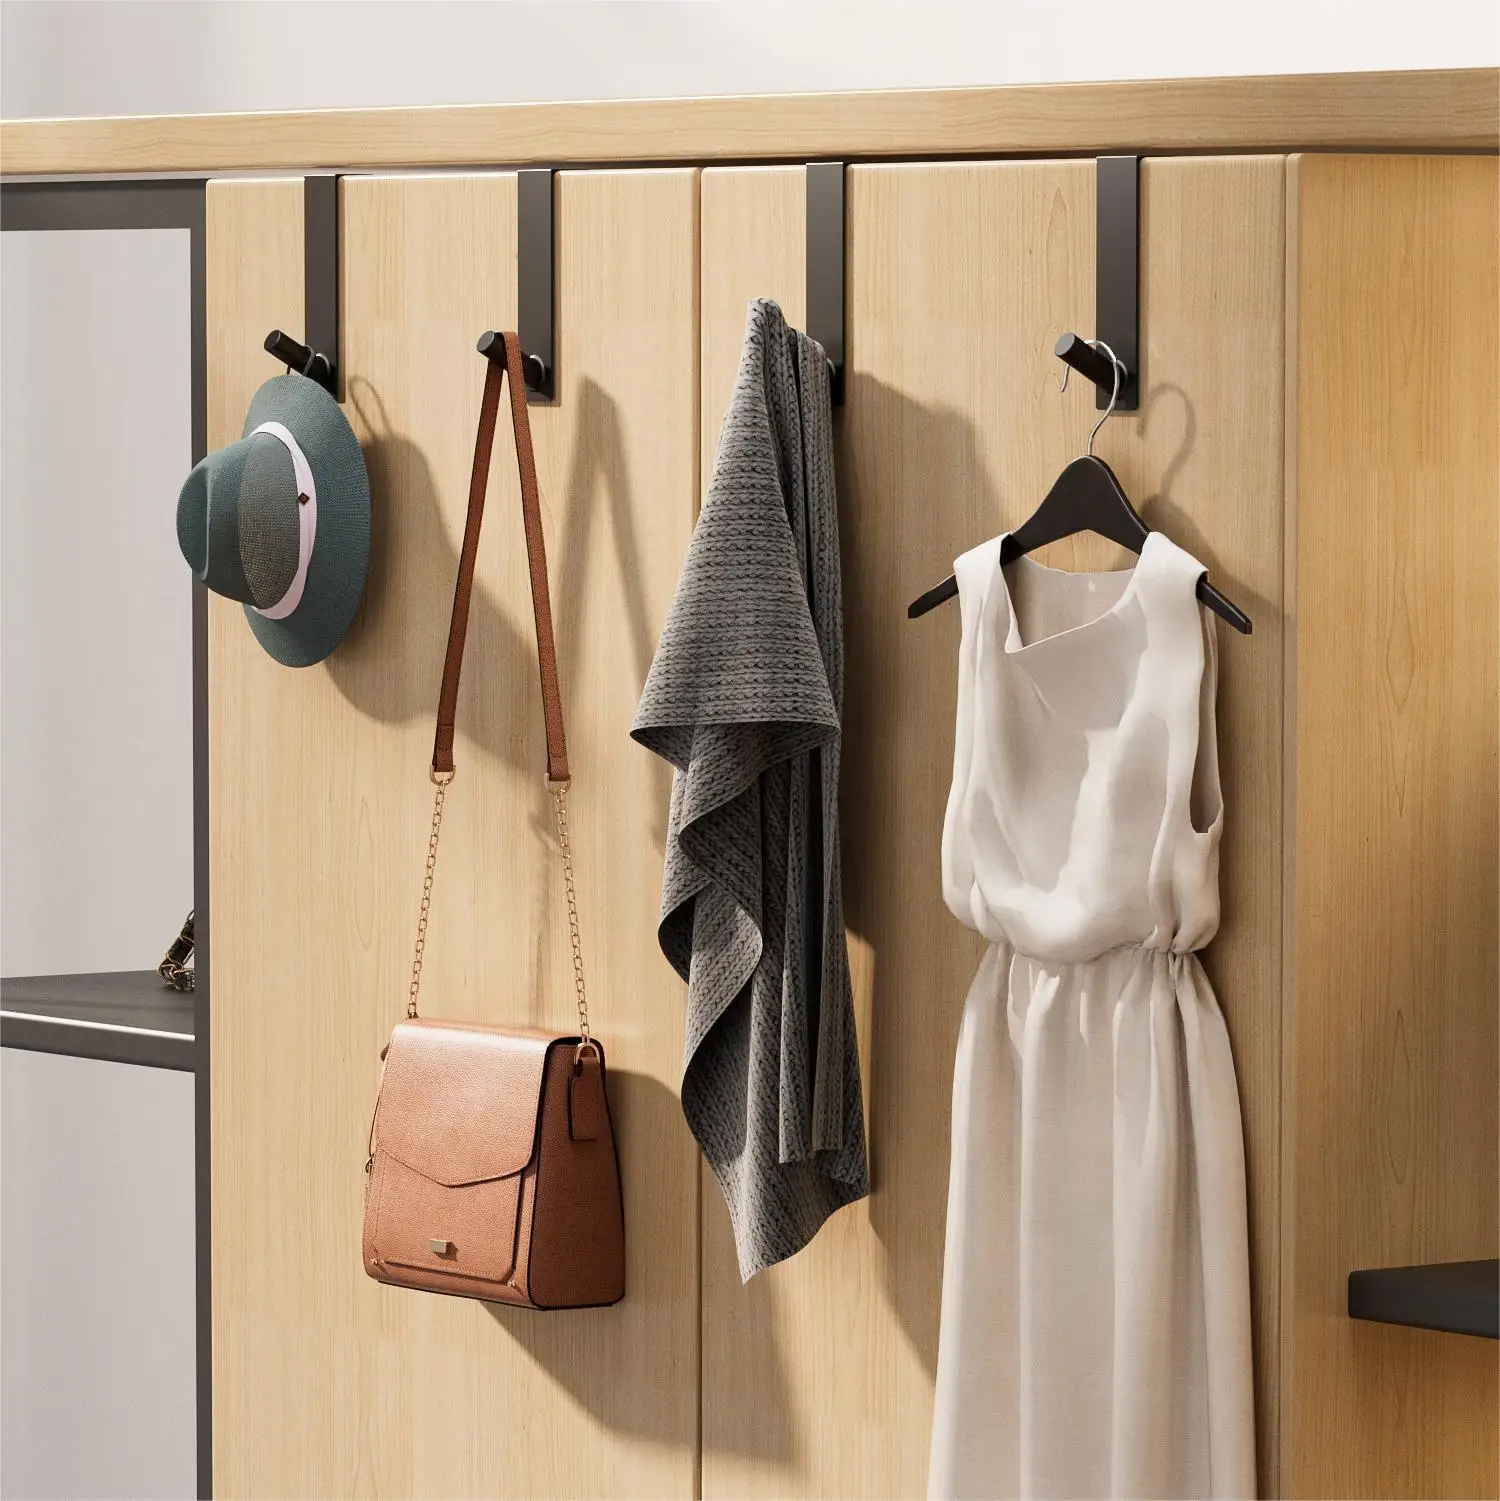 https://ae01.alicdn.com/kf/S83592b4e96224b0aa5a4fe066160d10fp/Good-Quality-Door-Hook-Cloth-Key-Towel-Holder-Multi-purpose-Punch-Free-Kitchen-Cabinet-Tool-Hanger.jpg